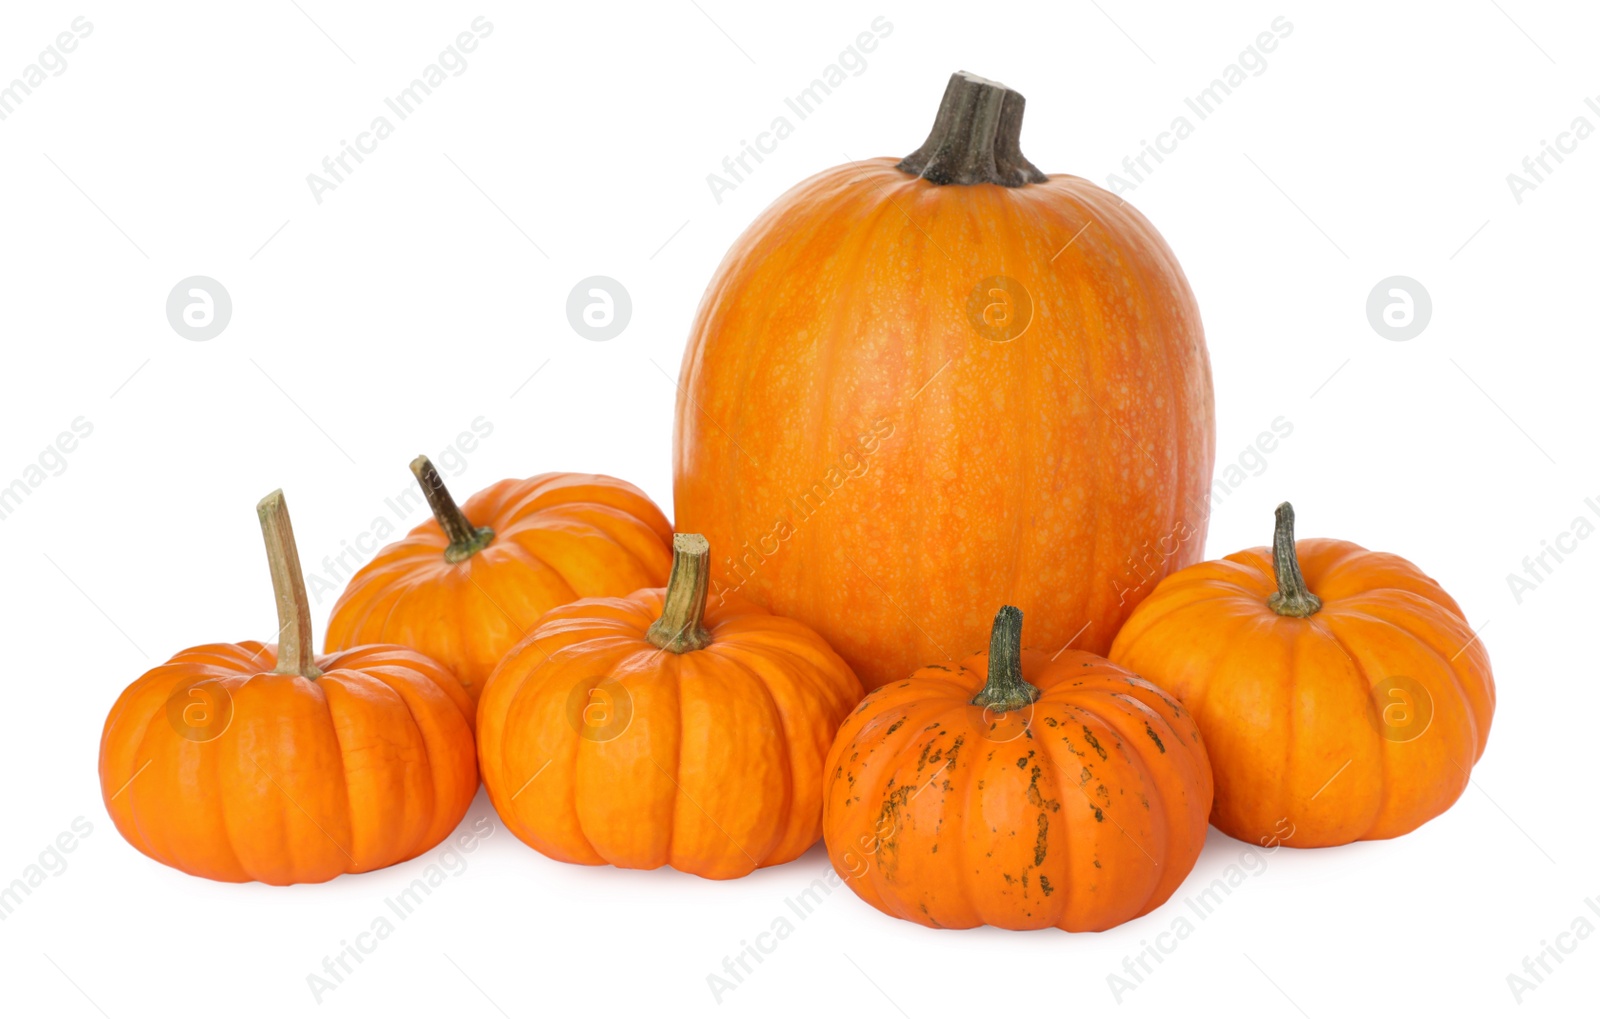 Photo of Pile of ripe orange pumpkins on white background